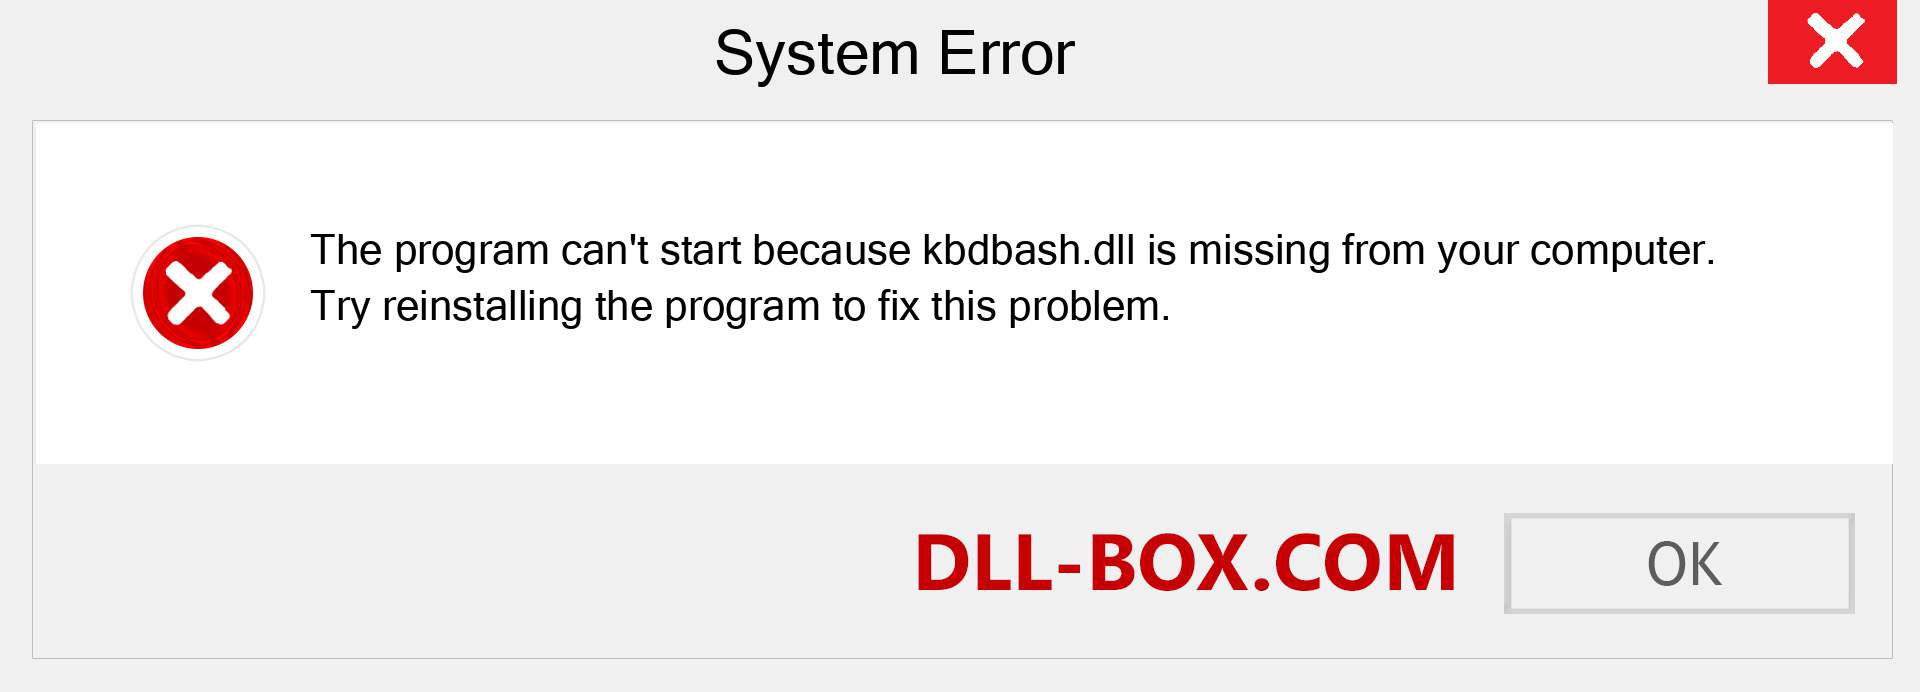  kbdbash.dll file is missing?. Download for Windows 7, 8, 10 - Fix  kbdbash dll Missing Error on Windows, photos, images